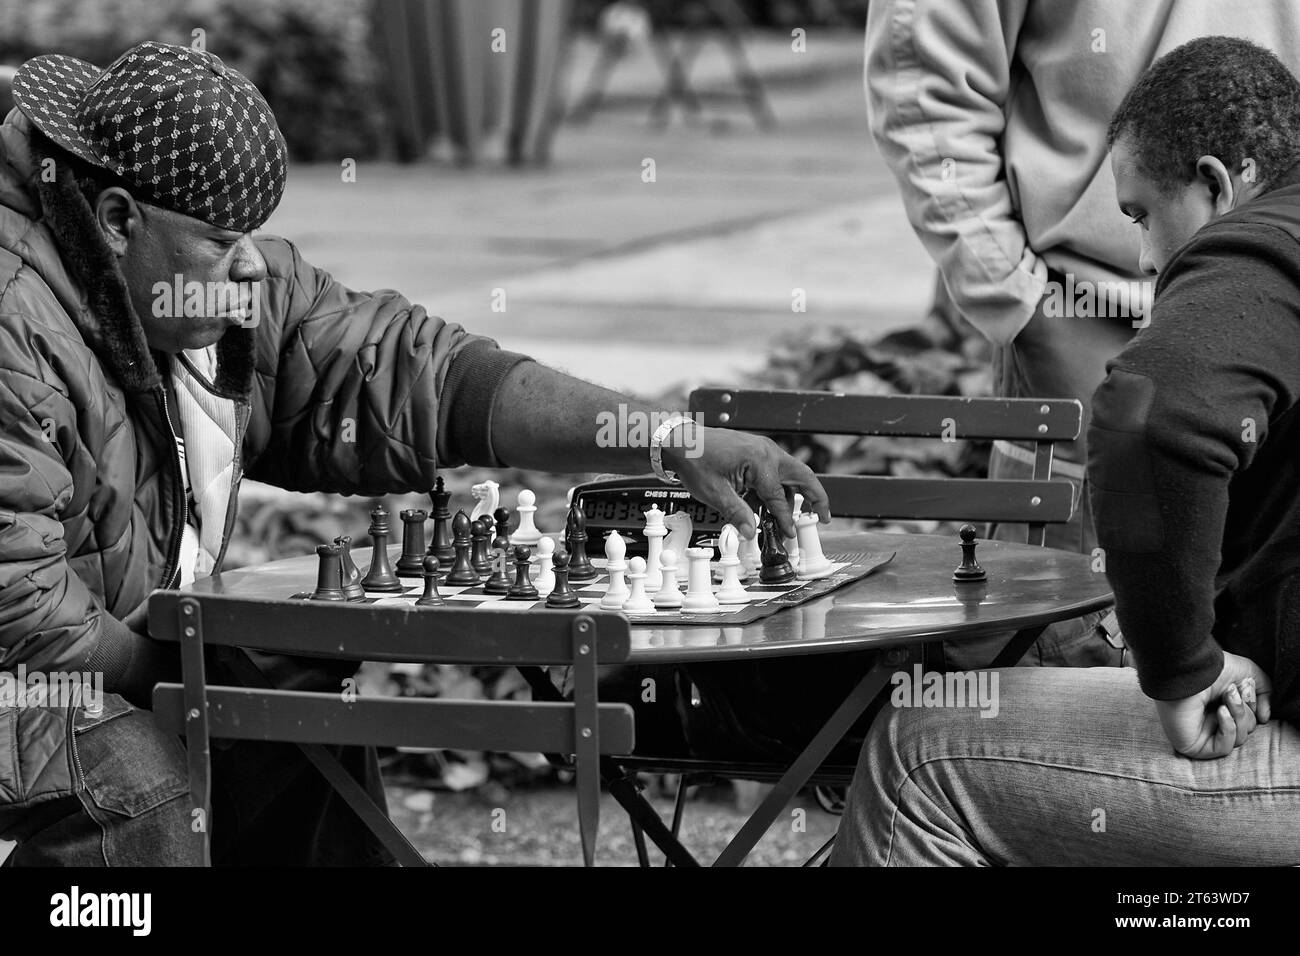 Two guys playing chess Stock Photo by ©MichalLudwiczak 74522861